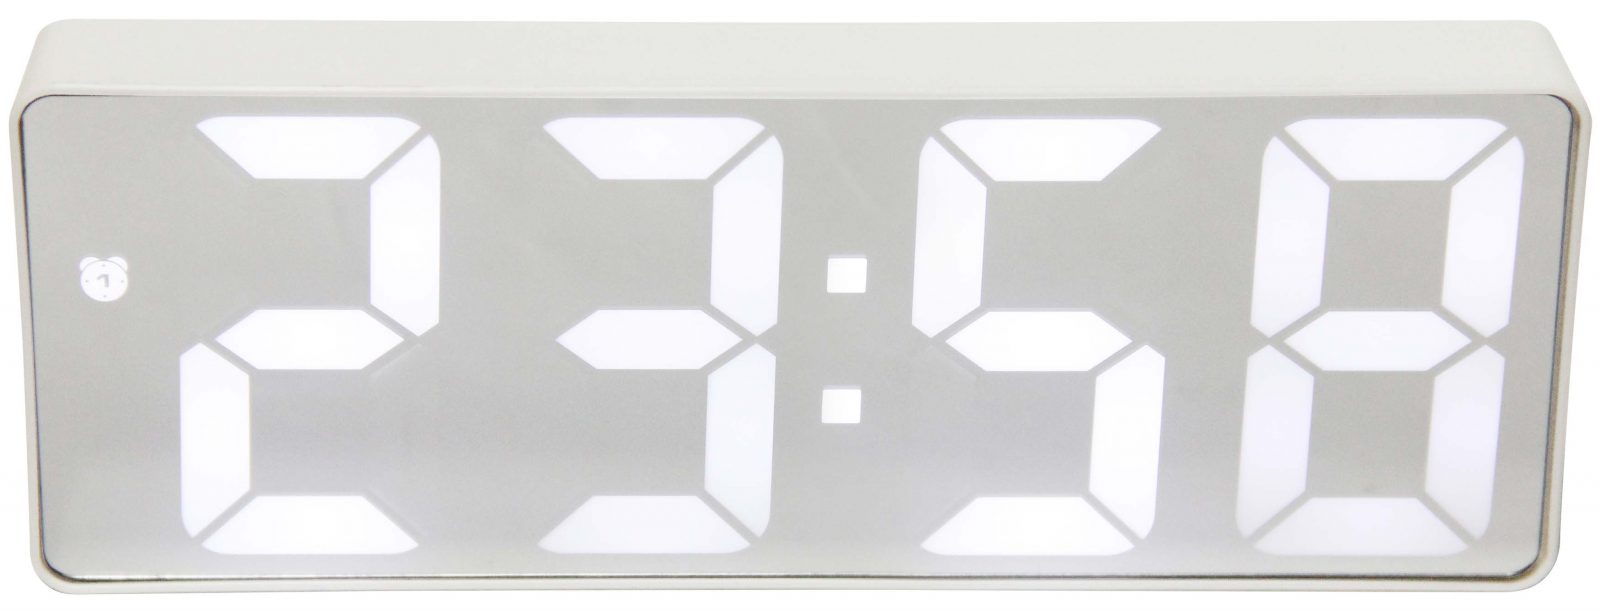 white digital clock